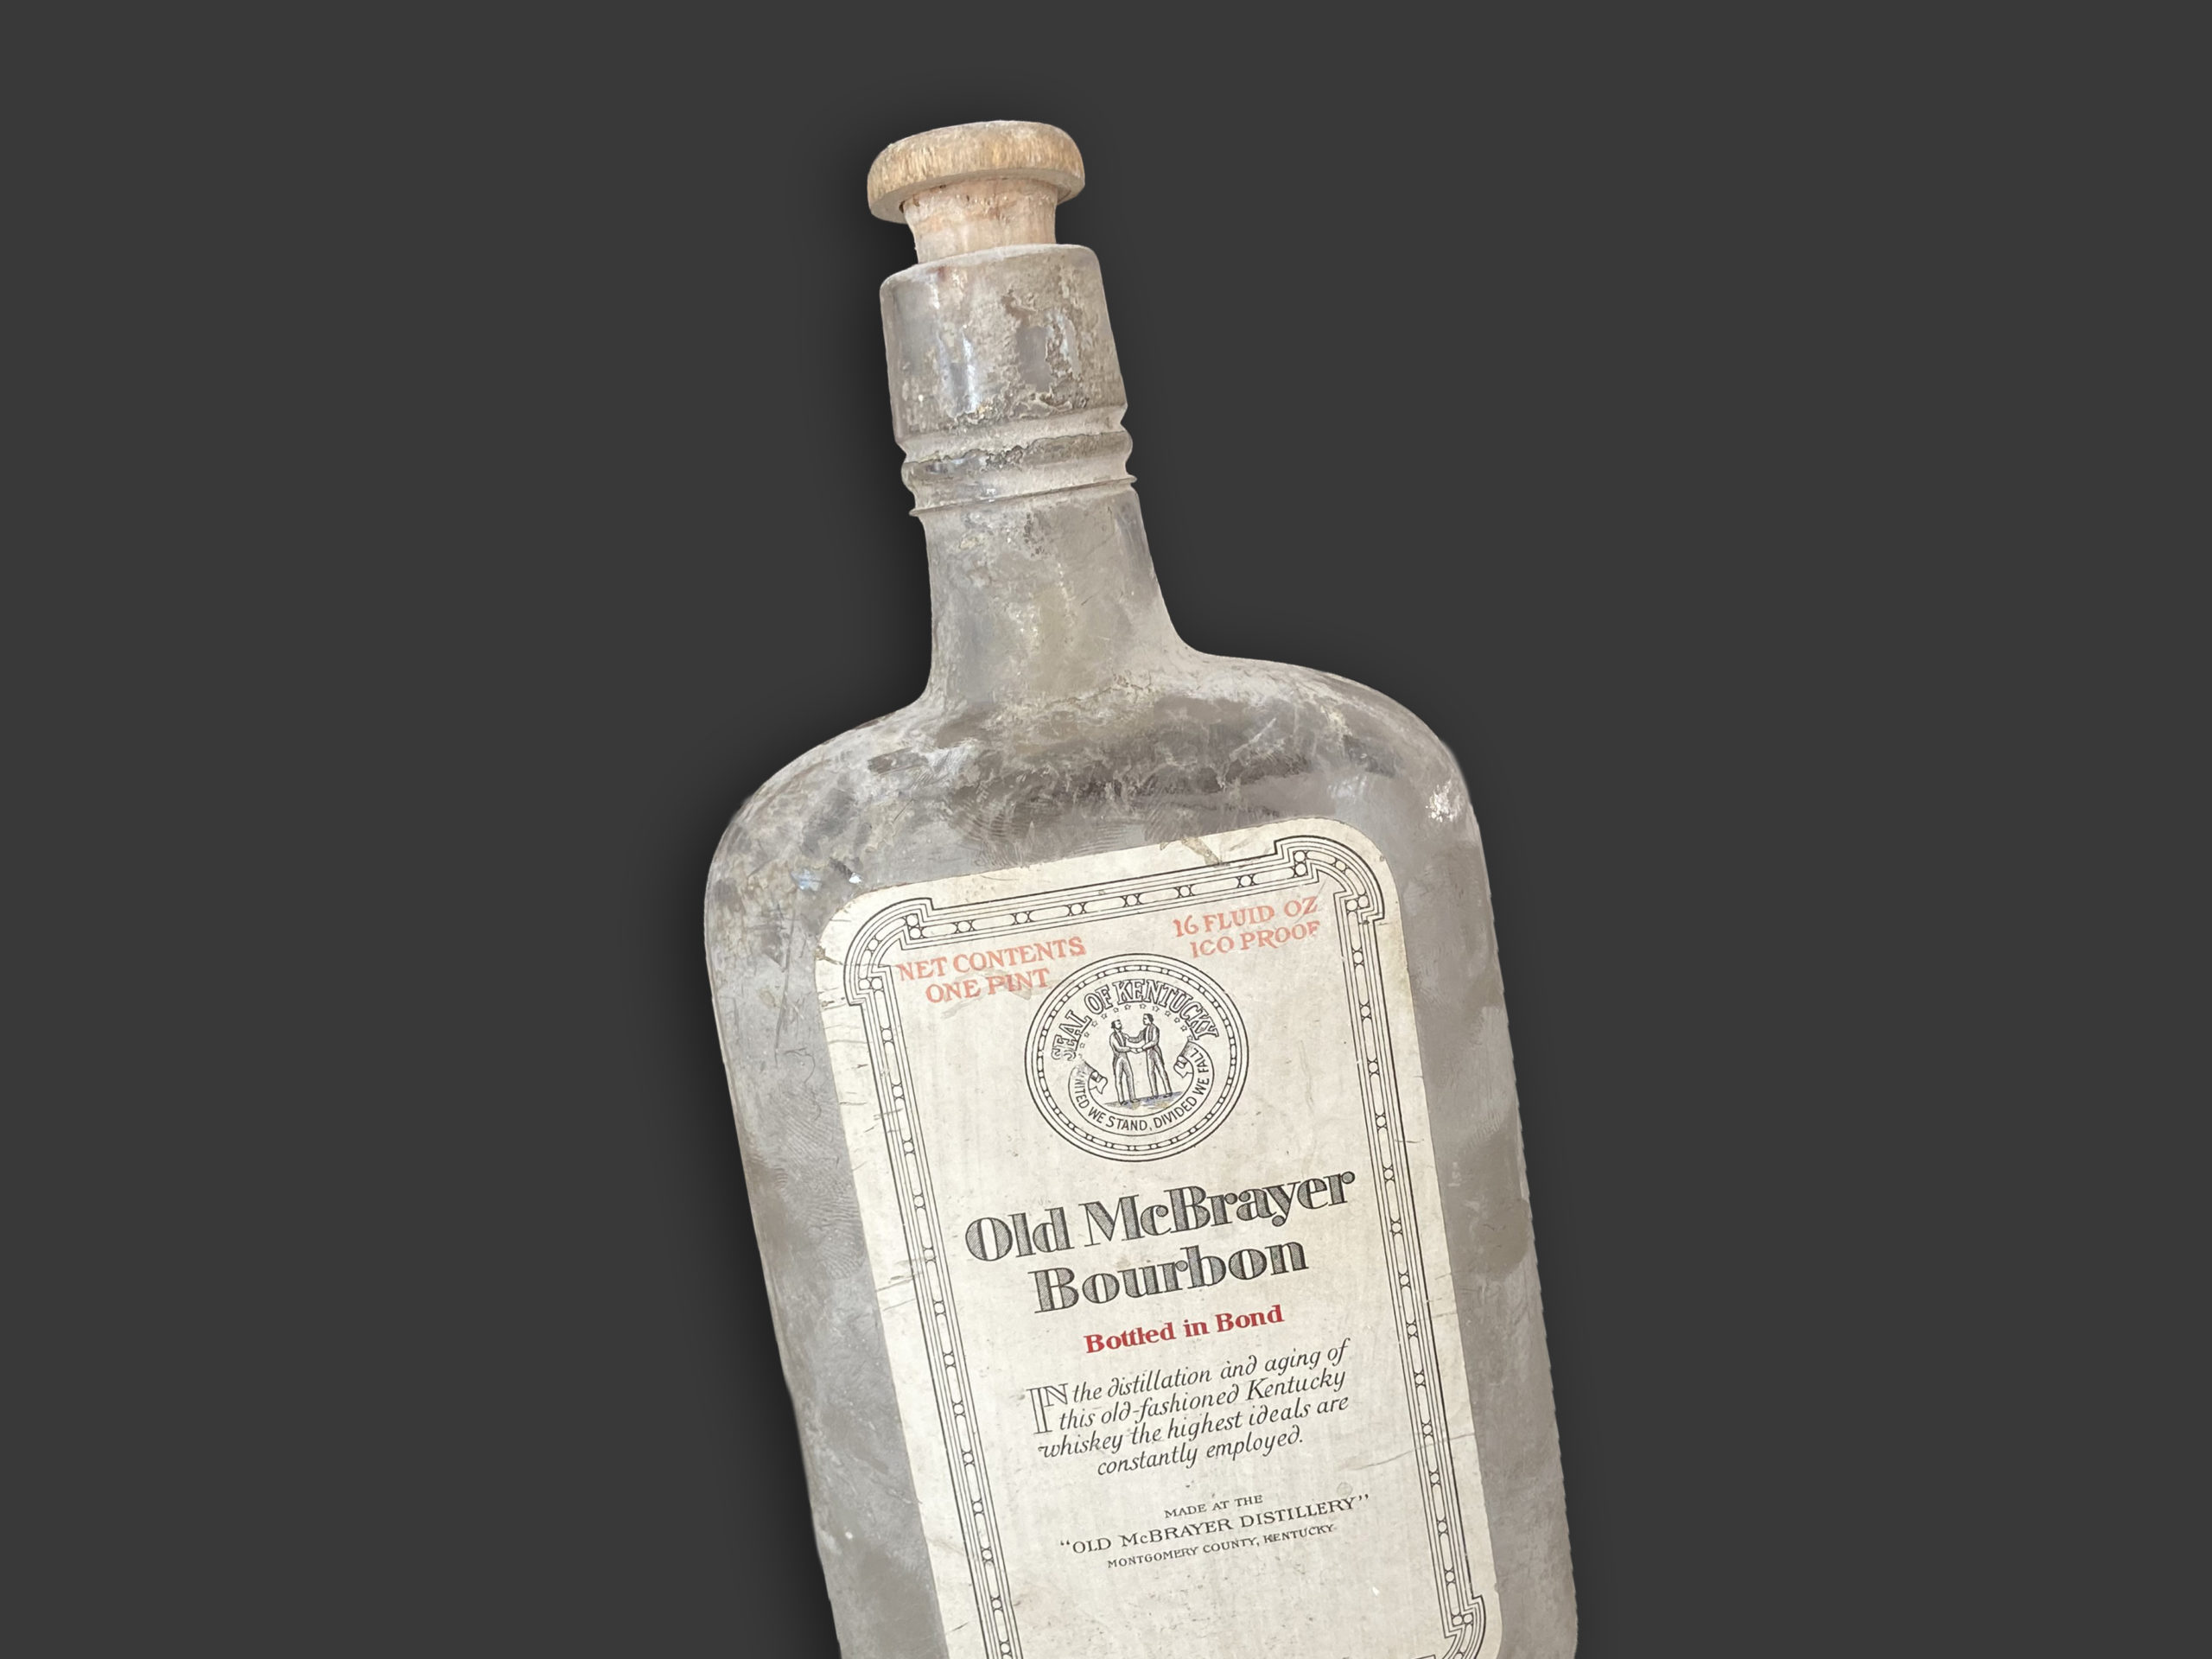 Old McBrayer Historical Bottle